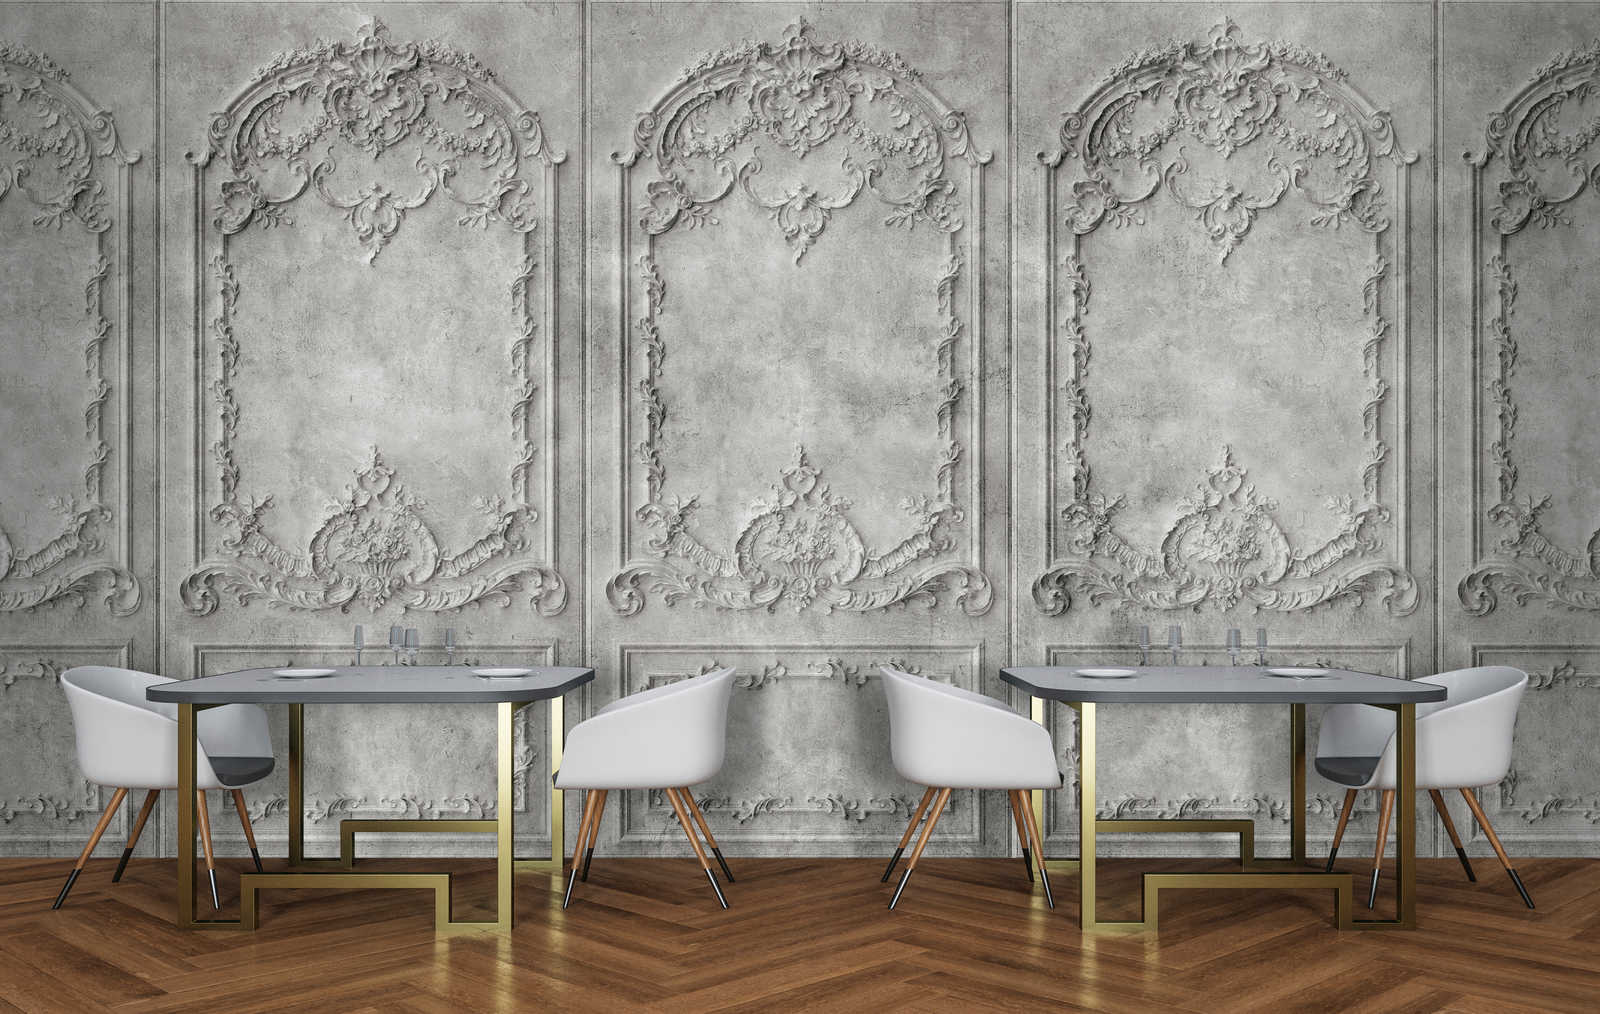             Versailles 2 – Fototapete Holz-Paneele Grau im Barock Stil
        